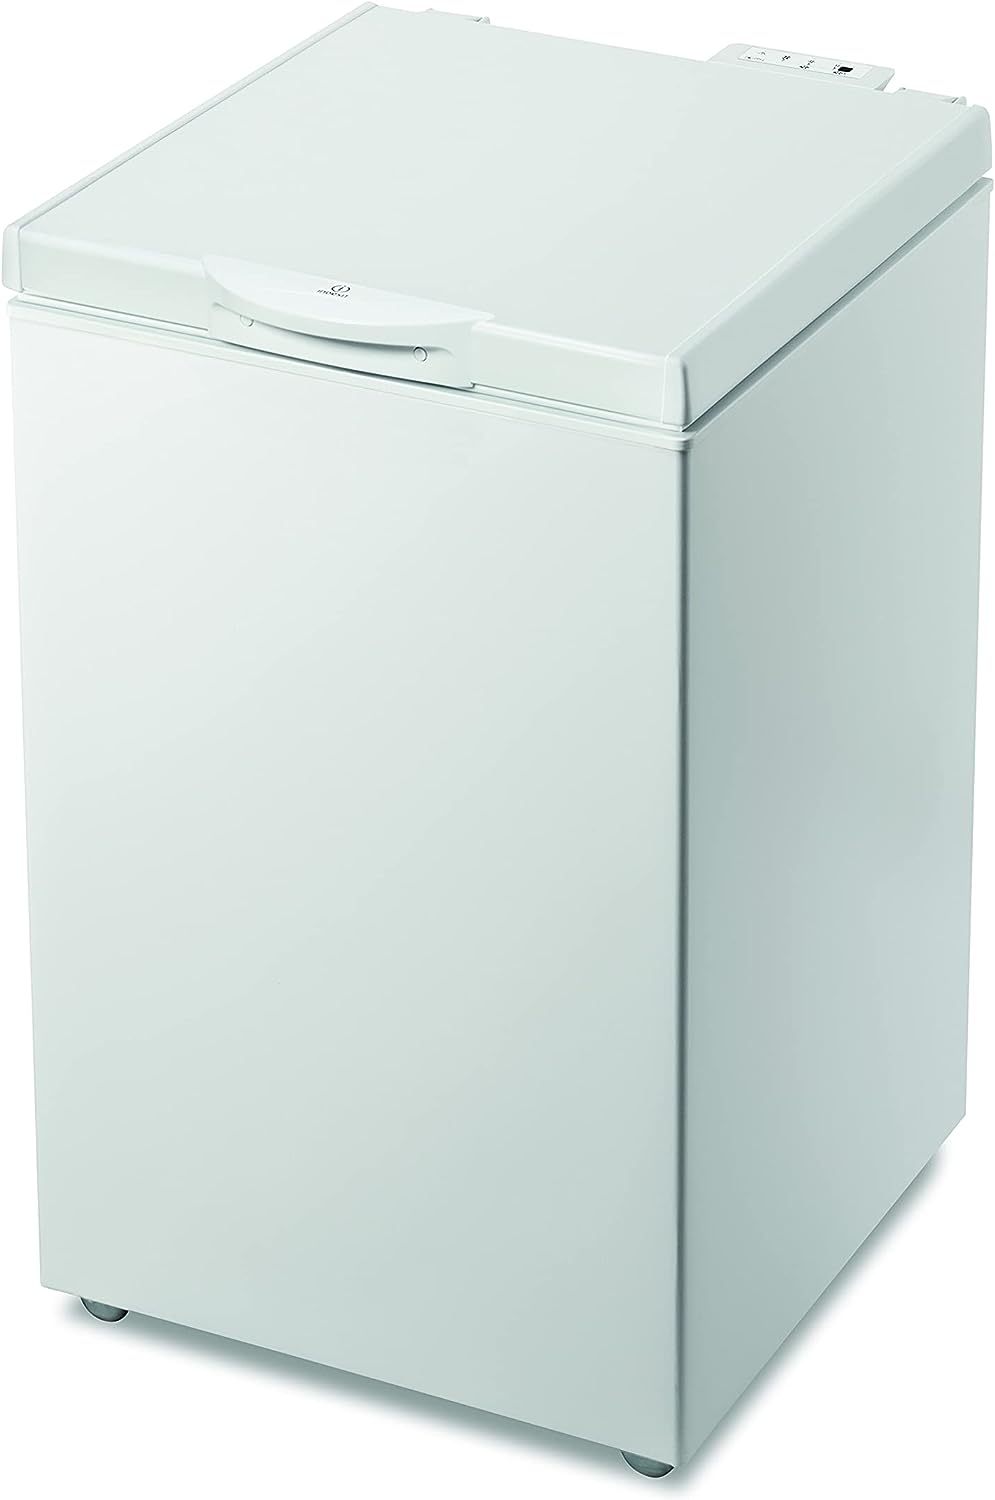 Indesit OS 1A 140 H - Congelatore a pozzetto, 133 Litri, Capacità di congelamento 16 Kg, Bianco, 86.5 x 57.3 x 64.2 cm